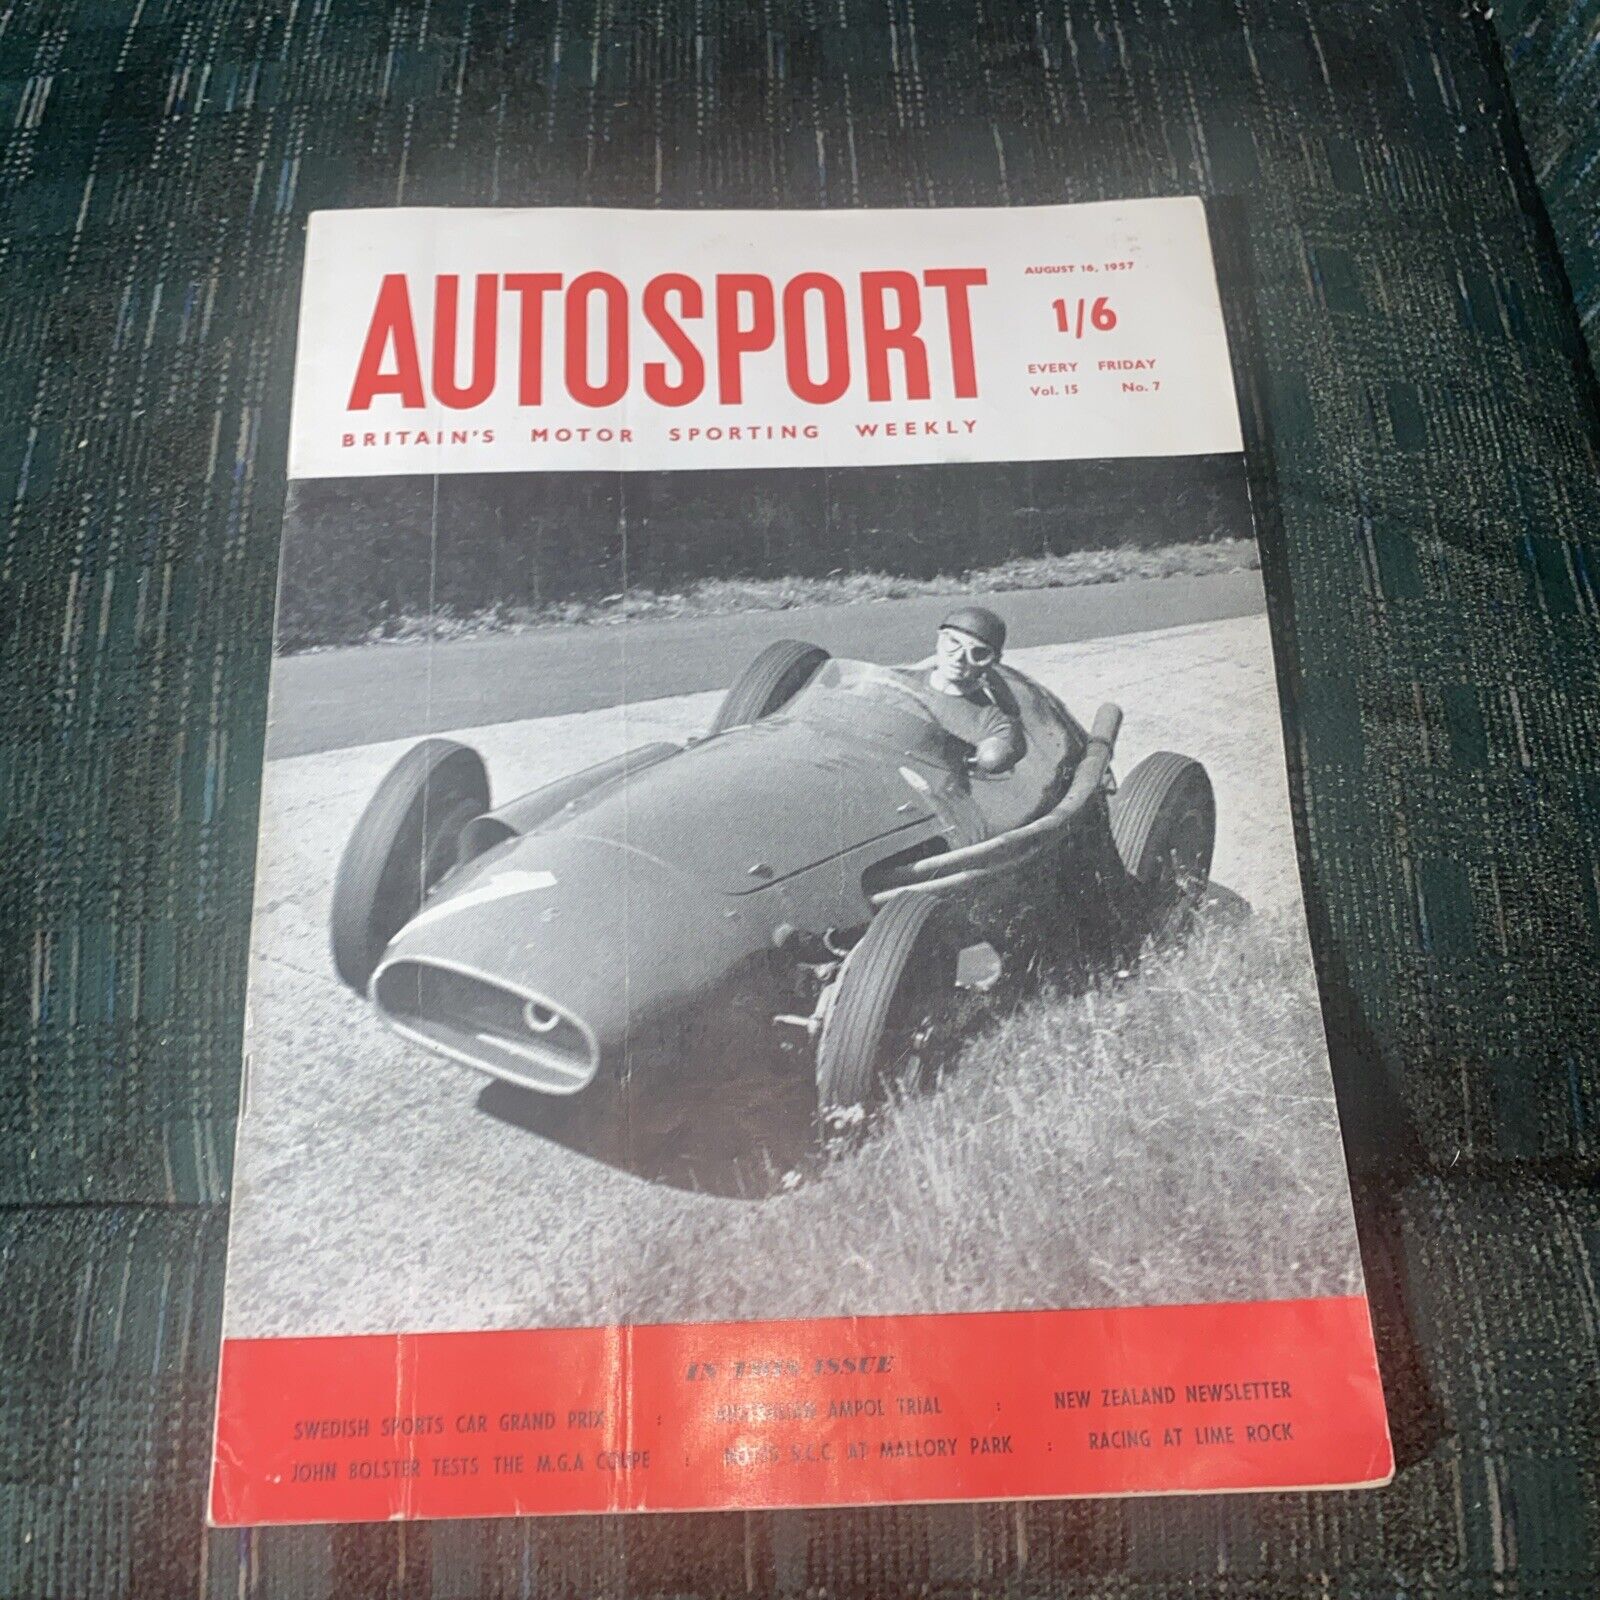 1957 August 16 Autosport Magazine Vol. 15 No. 7 Juan Fangio Maserati Cover